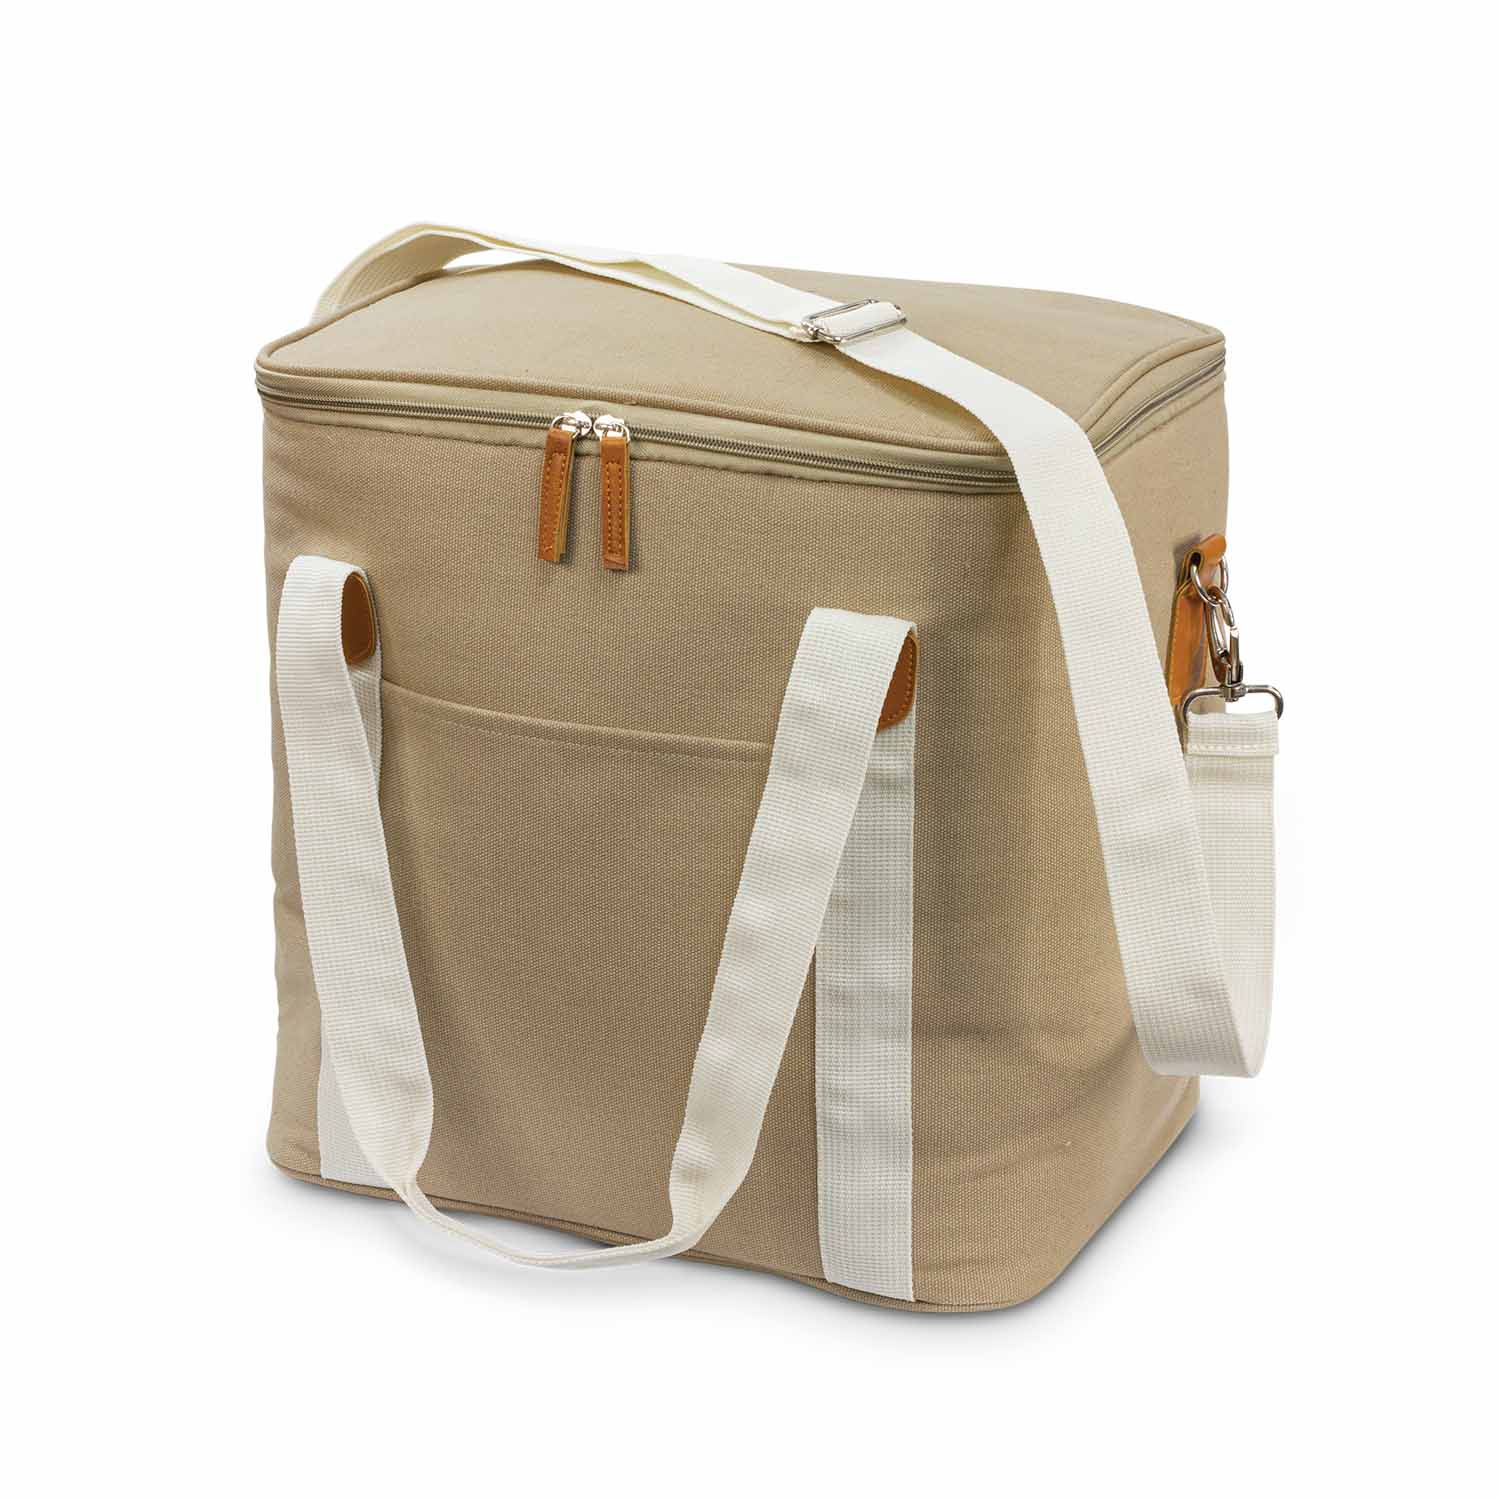 Buy Canvas Cooler Bag Online in Perth